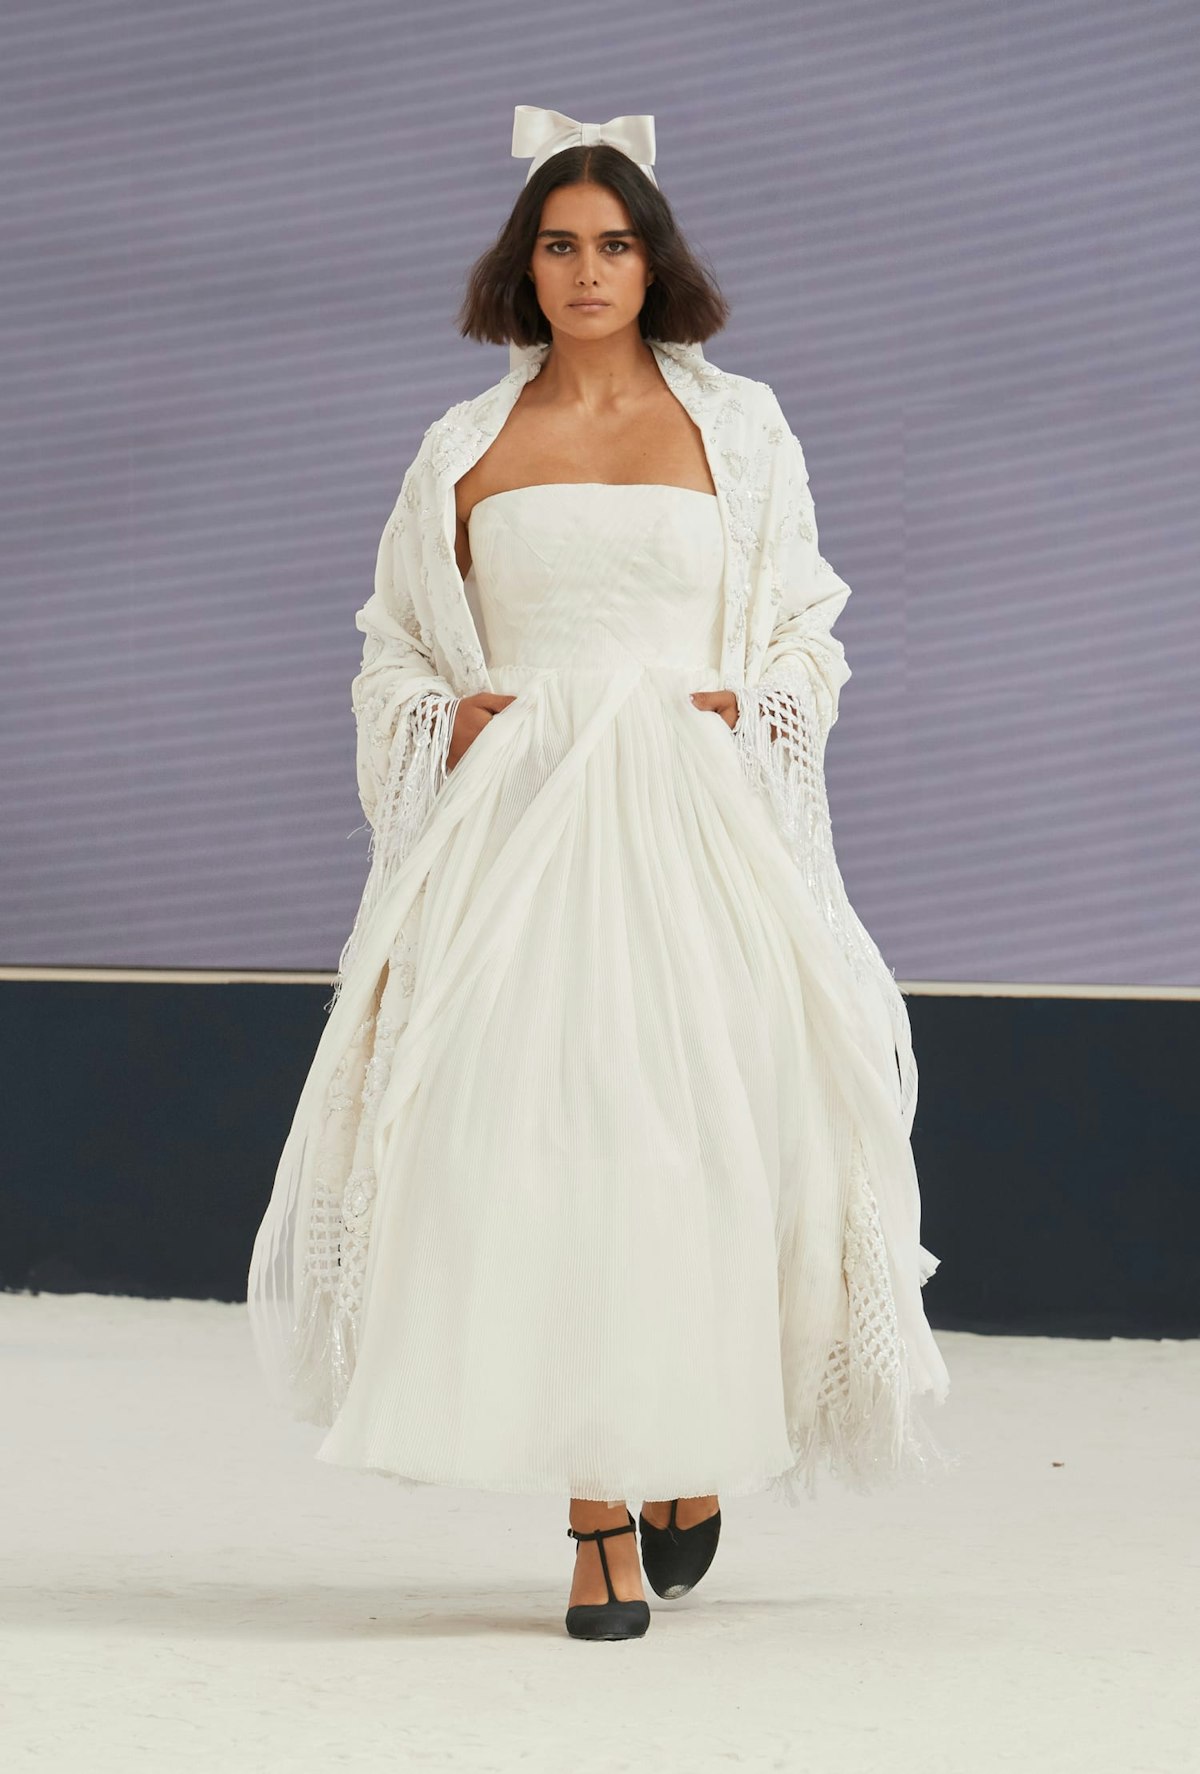 Chanel's Most Iconic Wedding Dresses — Wedding Season Bridal Gowns Runway  Photos